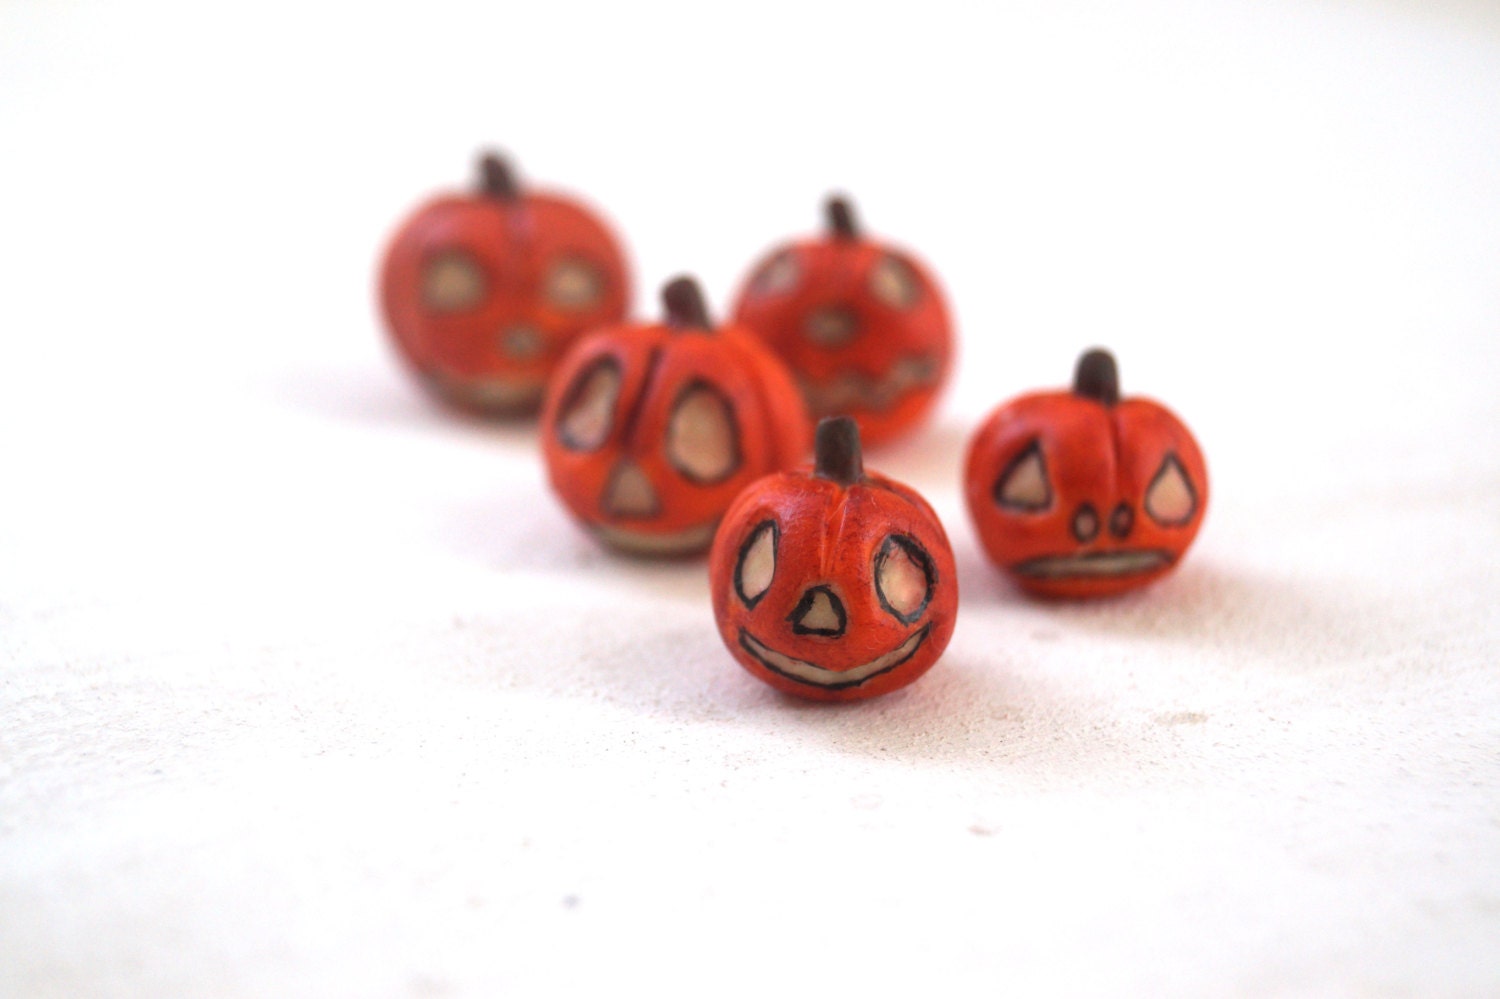 Halloween Spooky Pumpkins Jack o Lantern Handmade Glow In The Dark, Set Of 5 Miniature Polymer Clay - PolymerClayProject